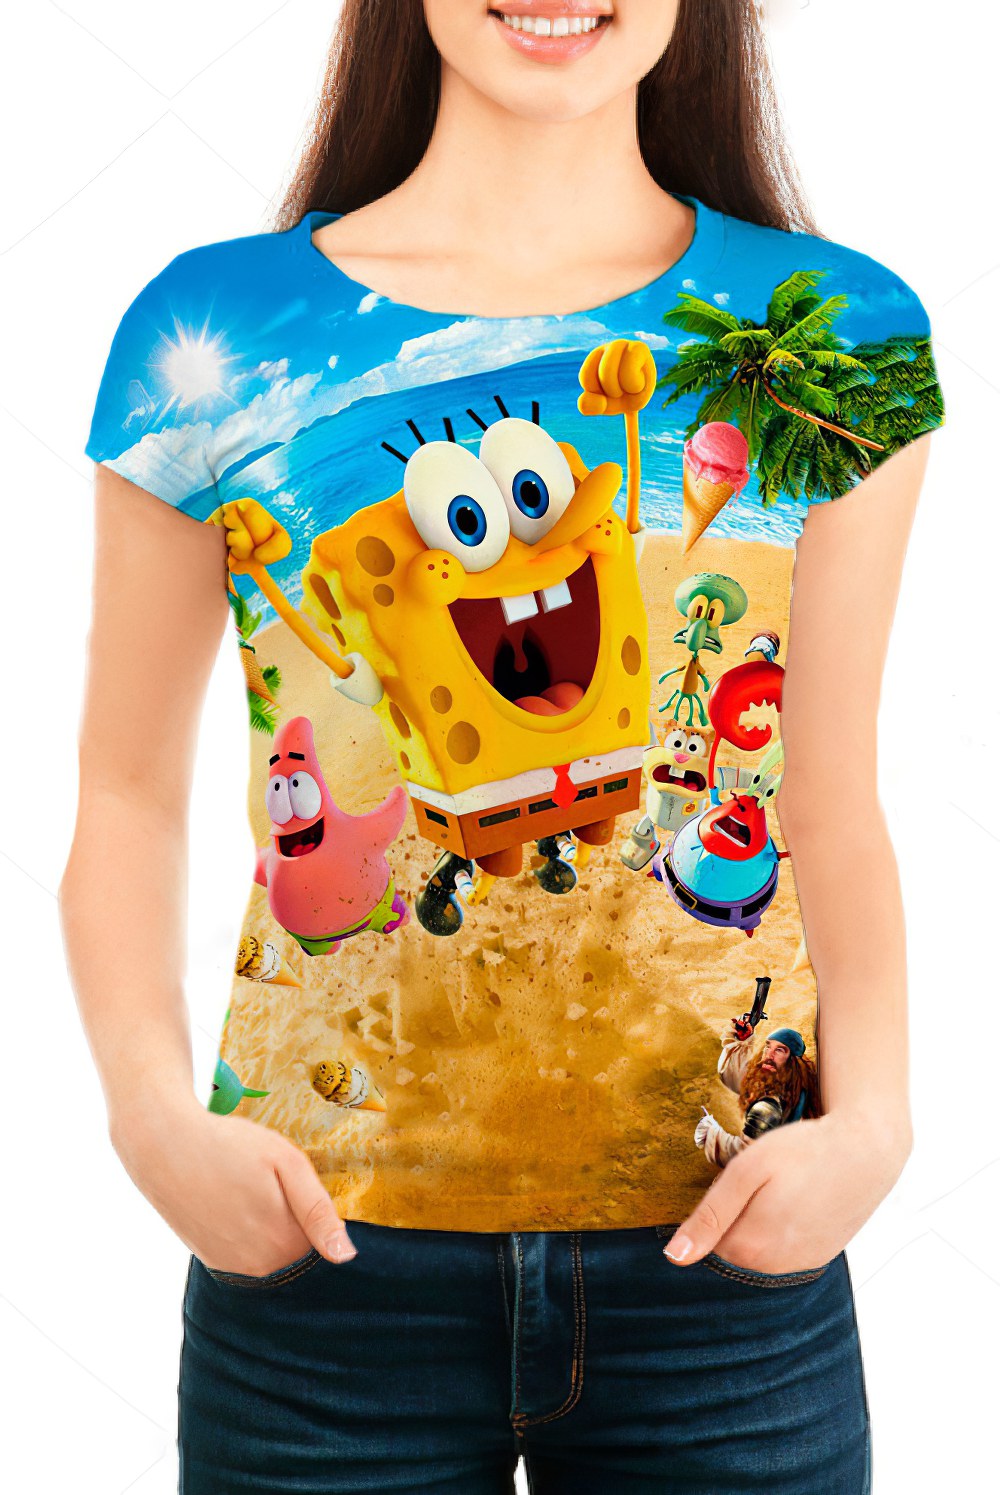 Gangster Spongebob Esponja Play On The Beach 3d Shirt Full Size Up To 5xl